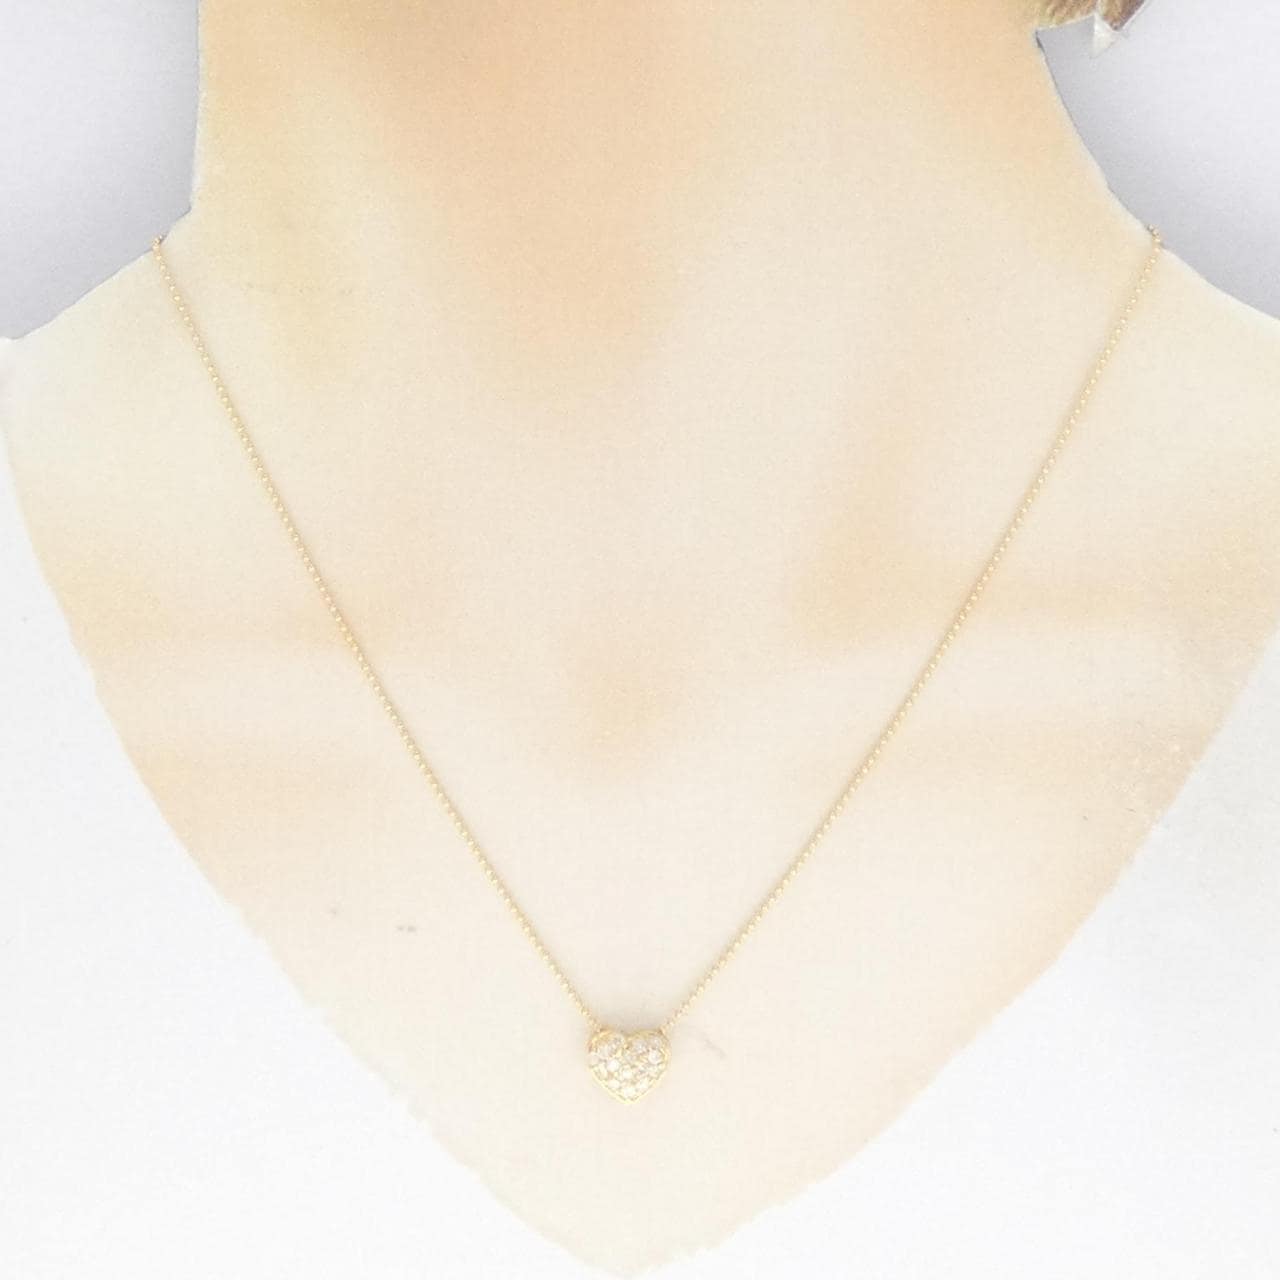 K18YG heart Diamond necklace 0.33CT